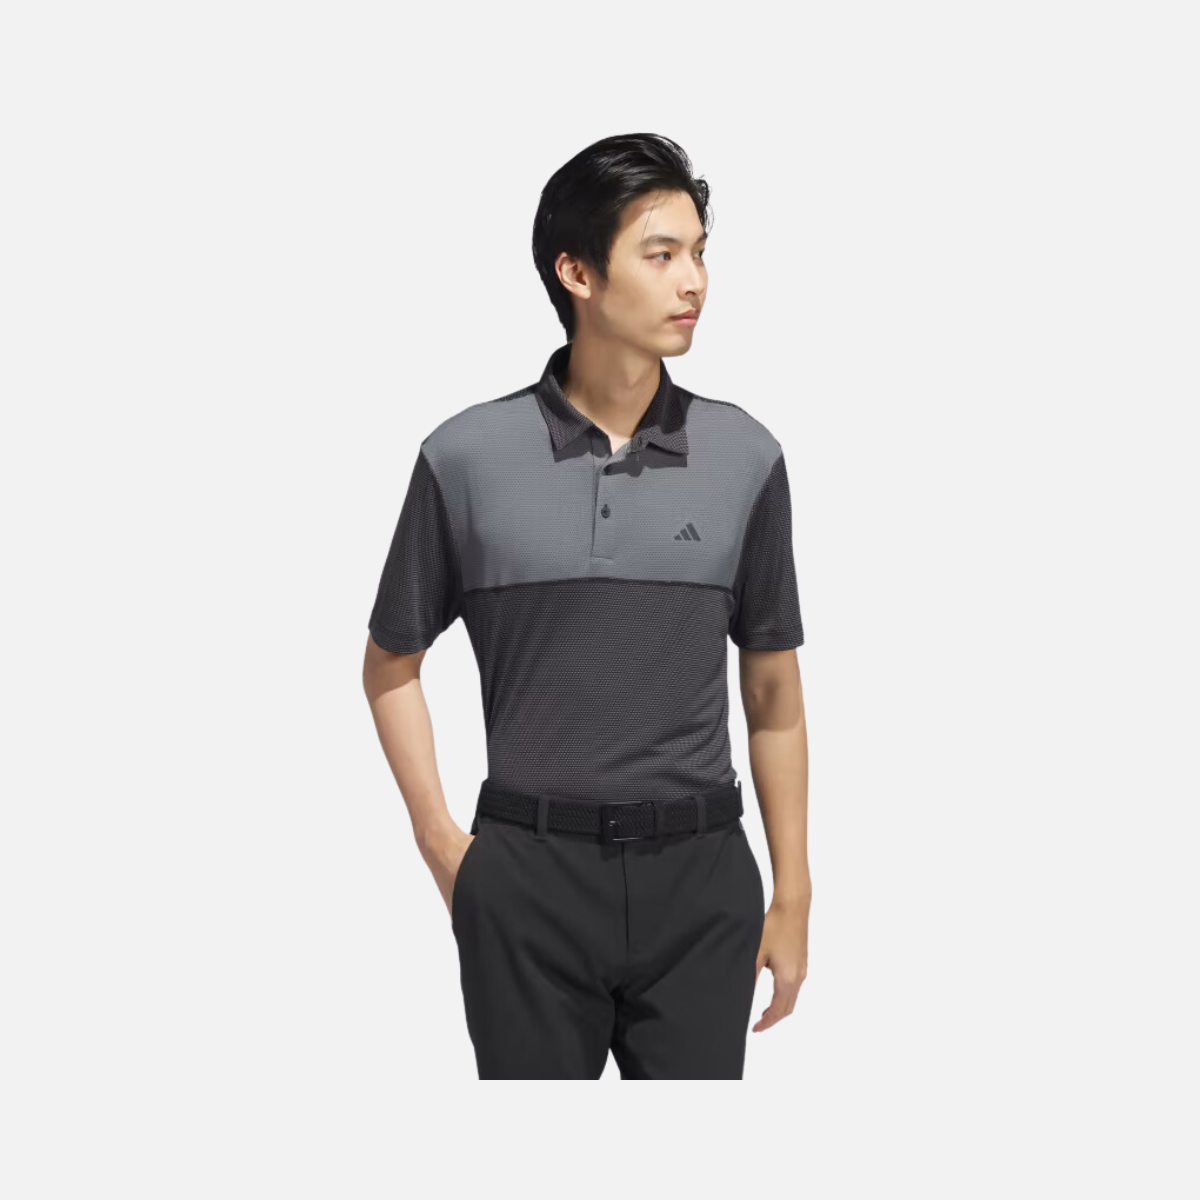 Adidas Core Colorblock Men's Golf Polo Shirt -Black